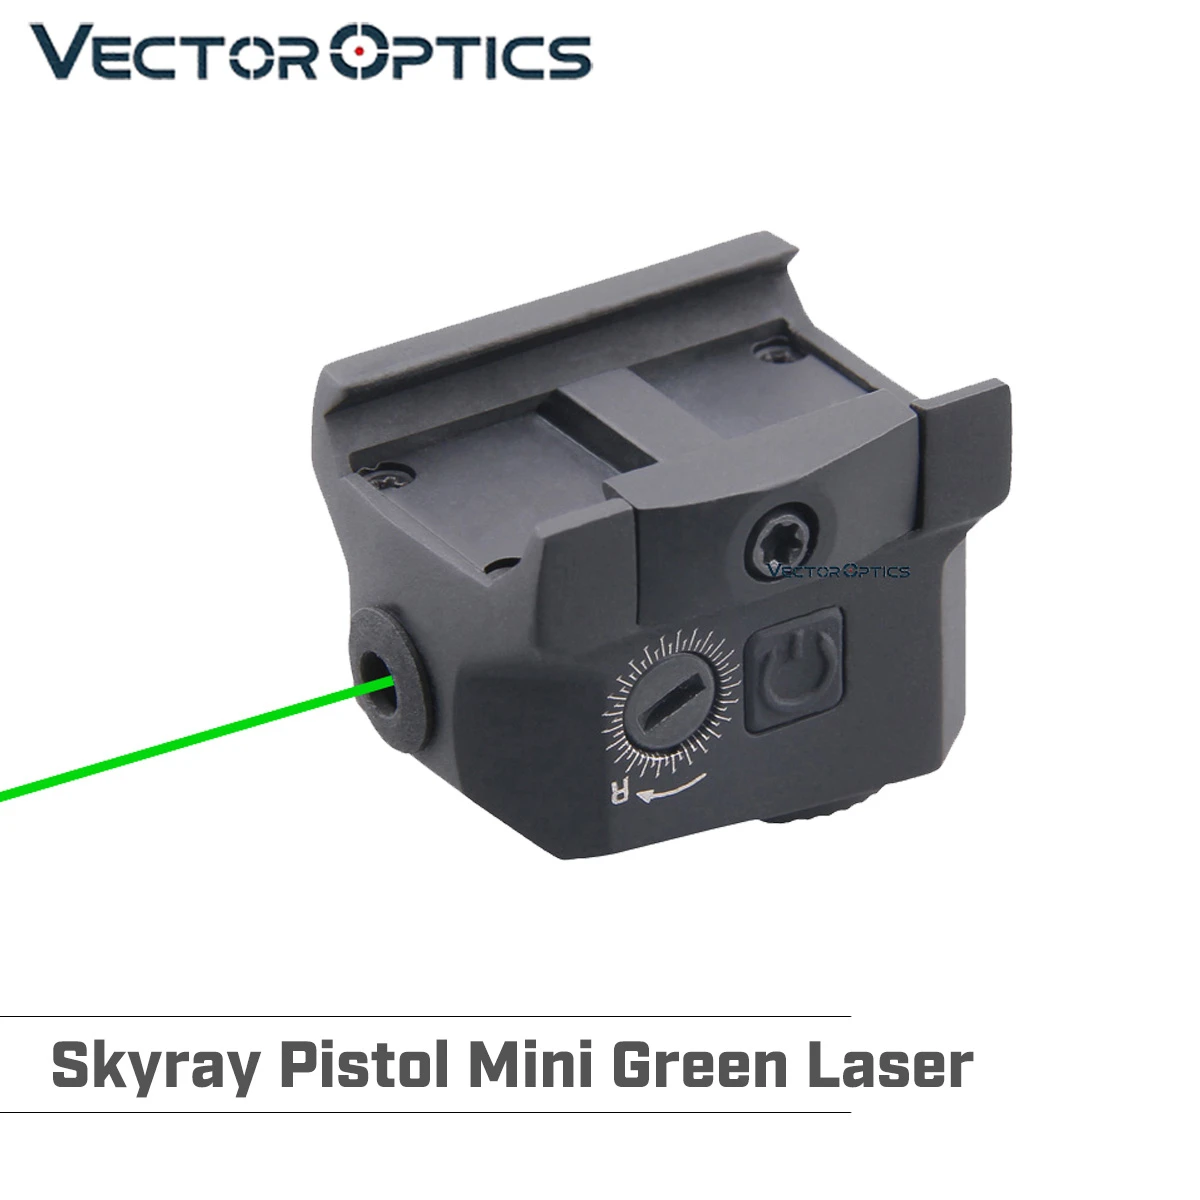 

Vector Optics Skyray Compact Tactical Green Laser Sight for Handgun Pistol Gun Picatinny Weapon Light Flashlight Strobe Combo